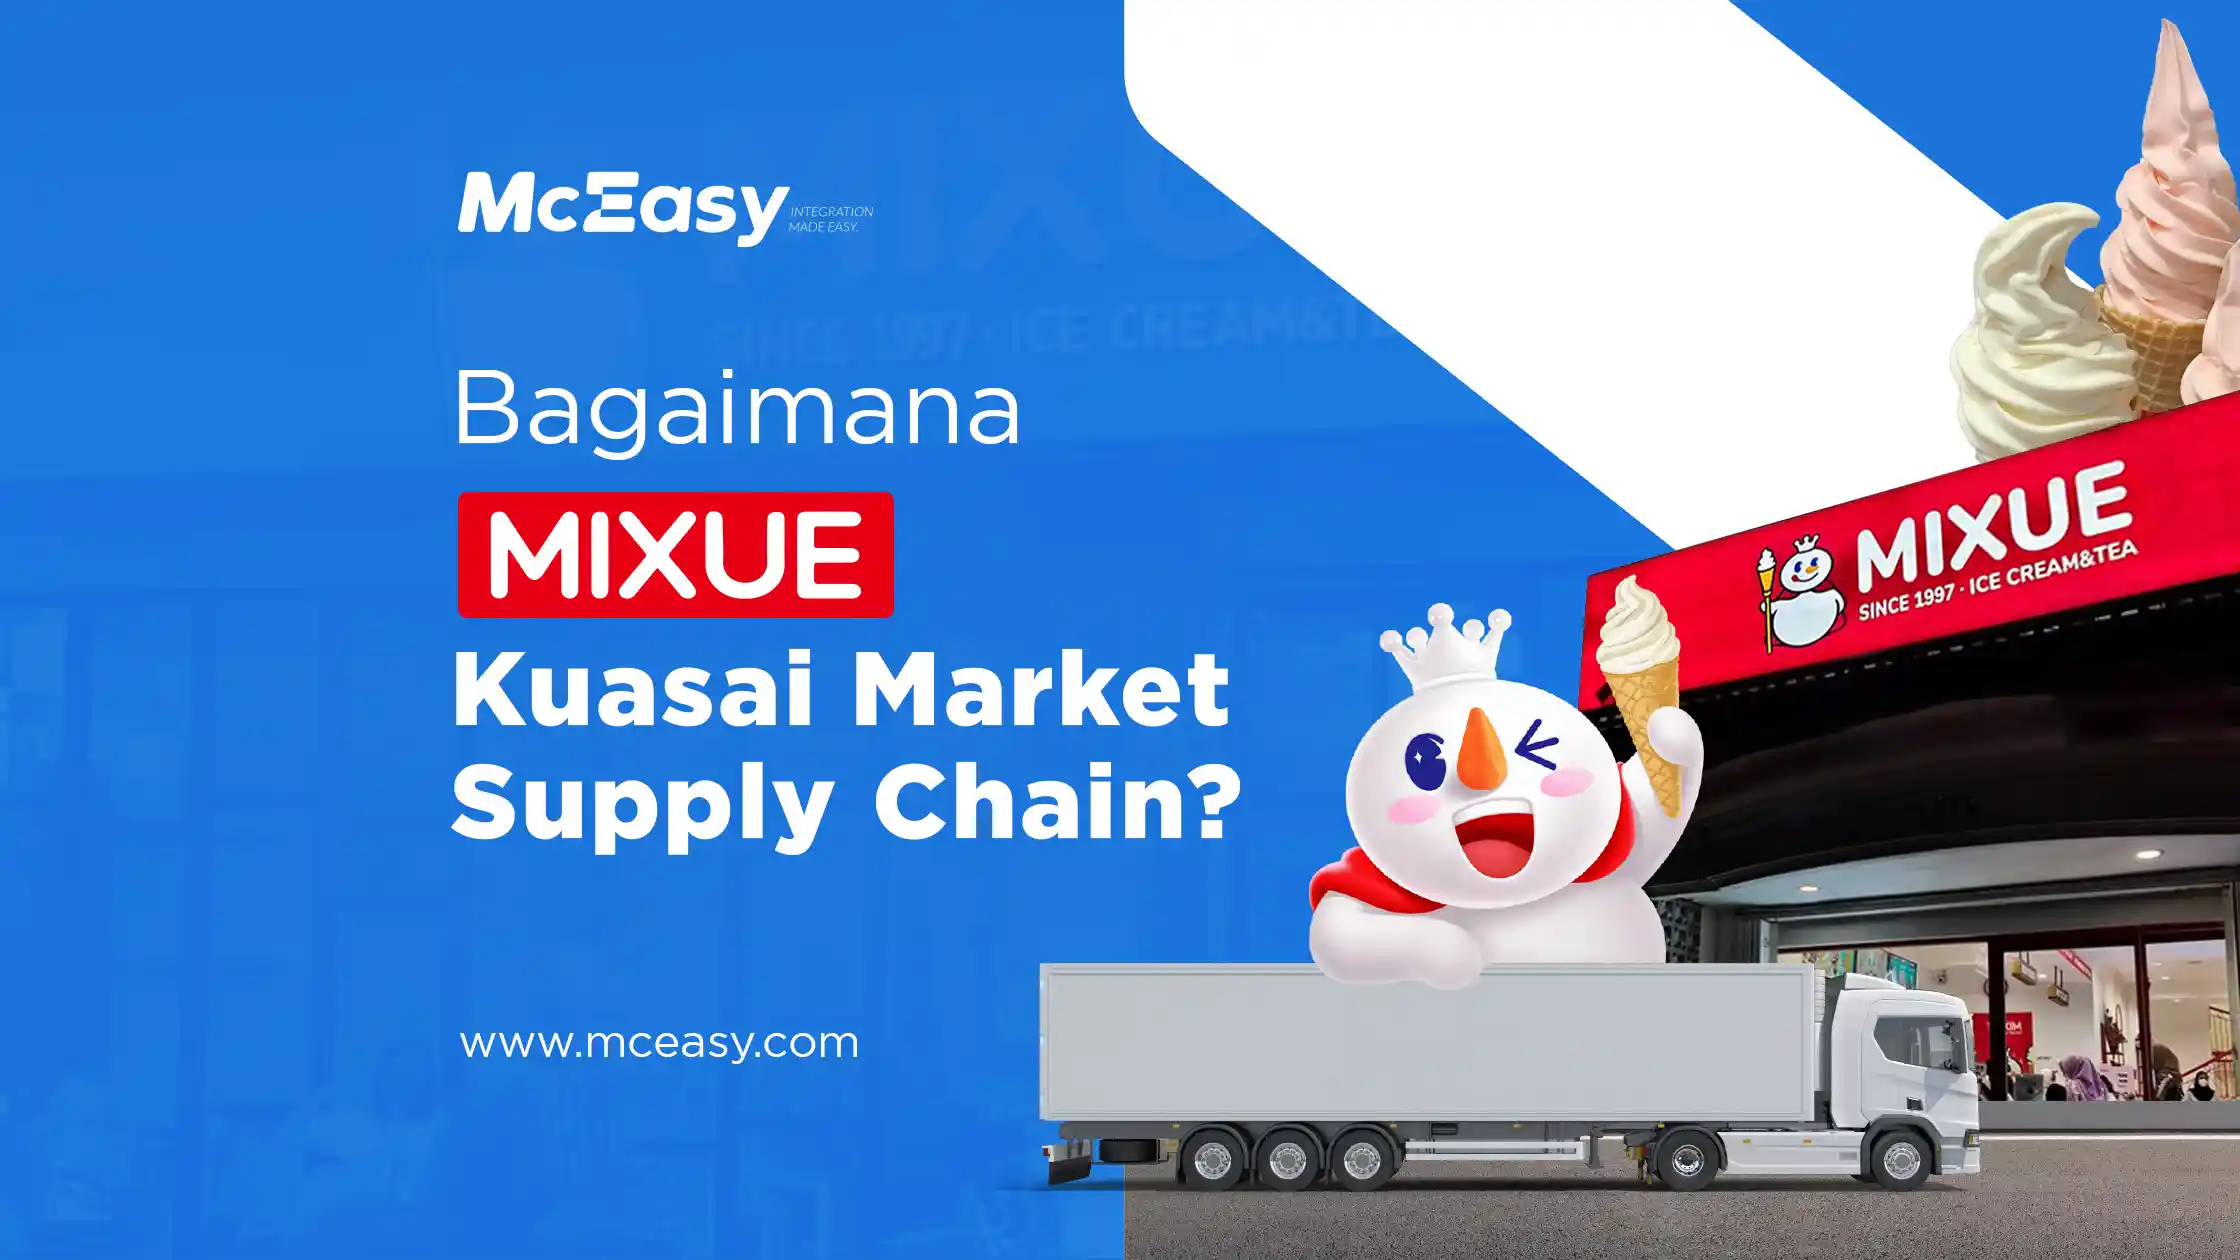 Bagaimana Mixue Kuasai Market Supply Chain?